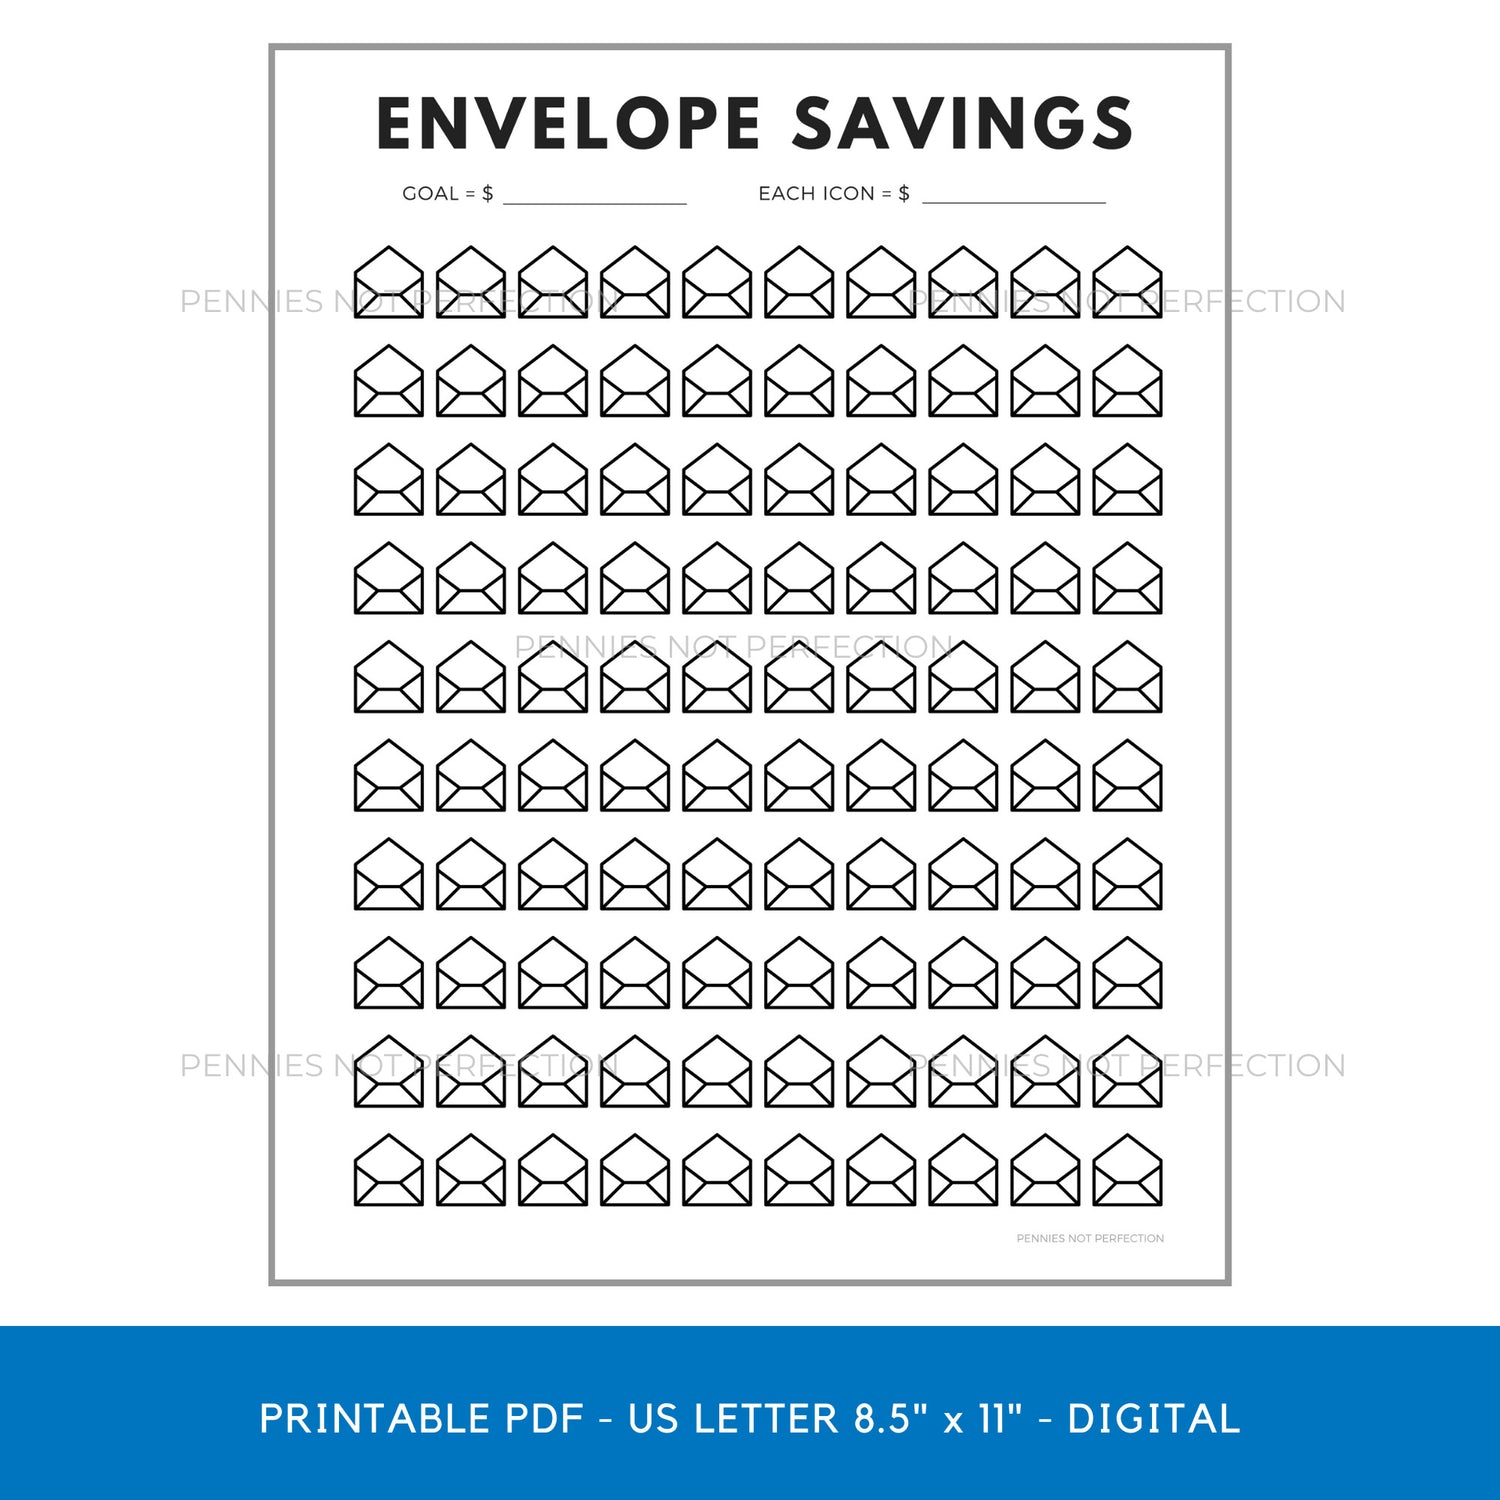 Envelope Savings Tracker Printable | Envelope Sinking Funds Tracker Chart | Save Money Printable Or Digital 1